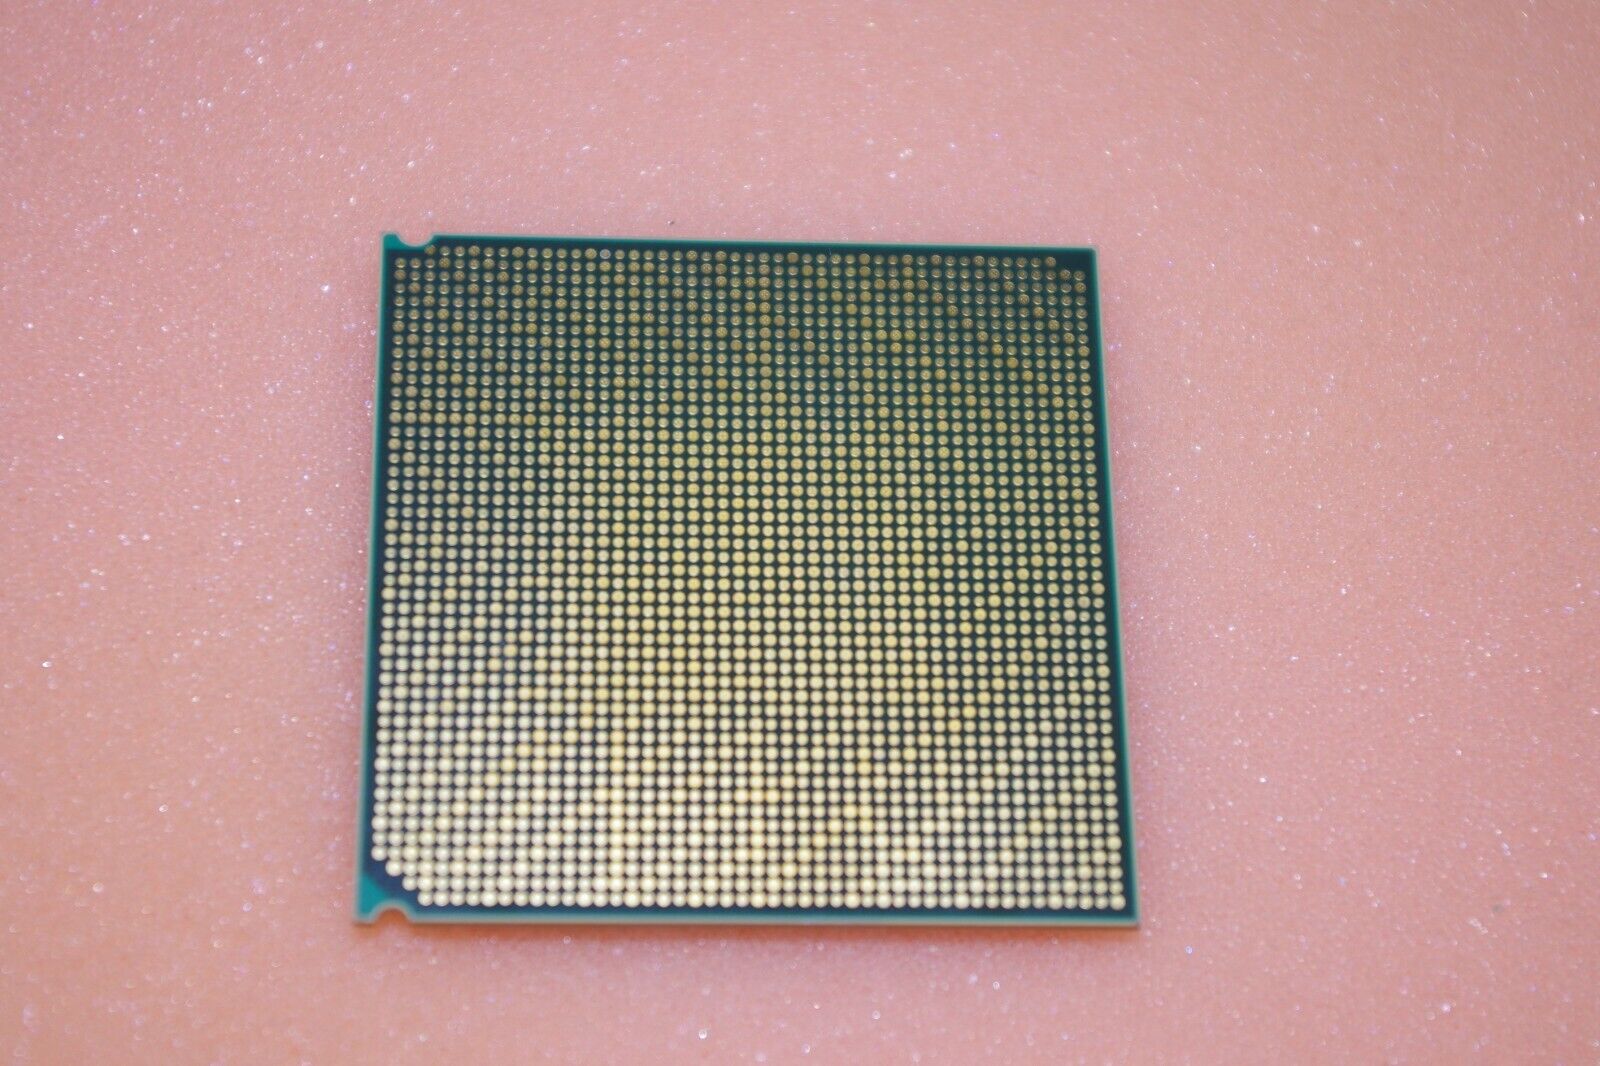  IBM Power7 CPU Processor Module 53Y0476